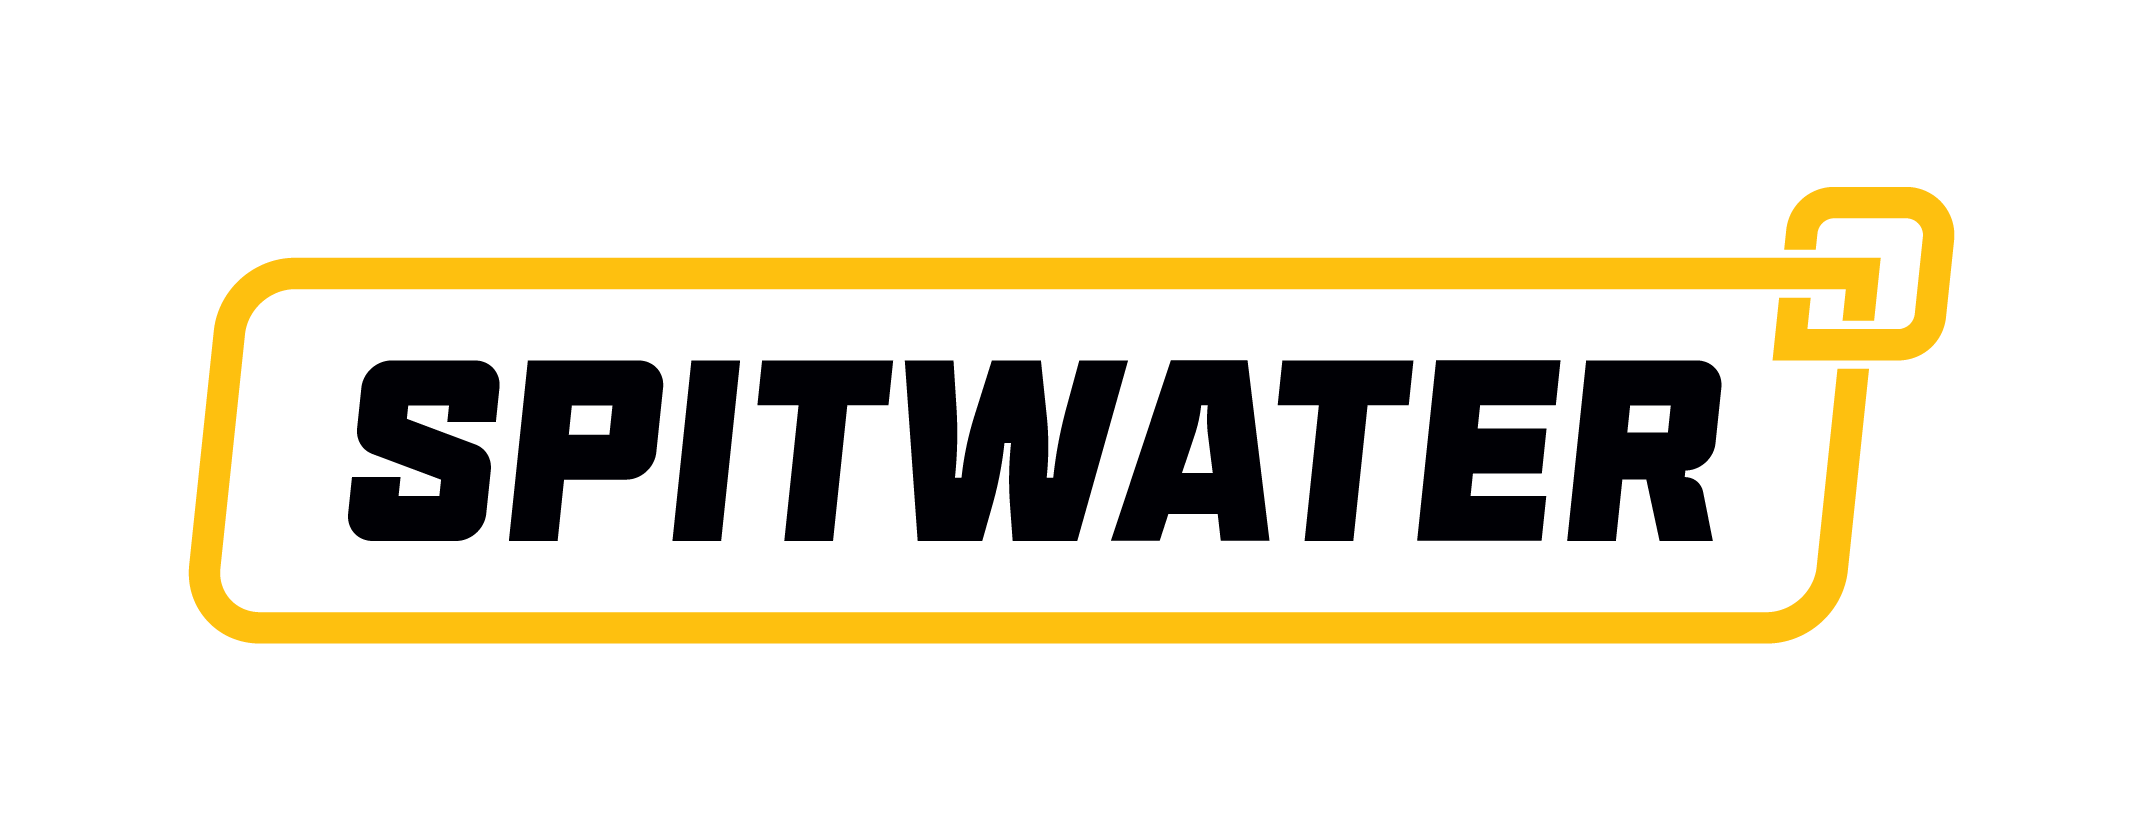 story logo